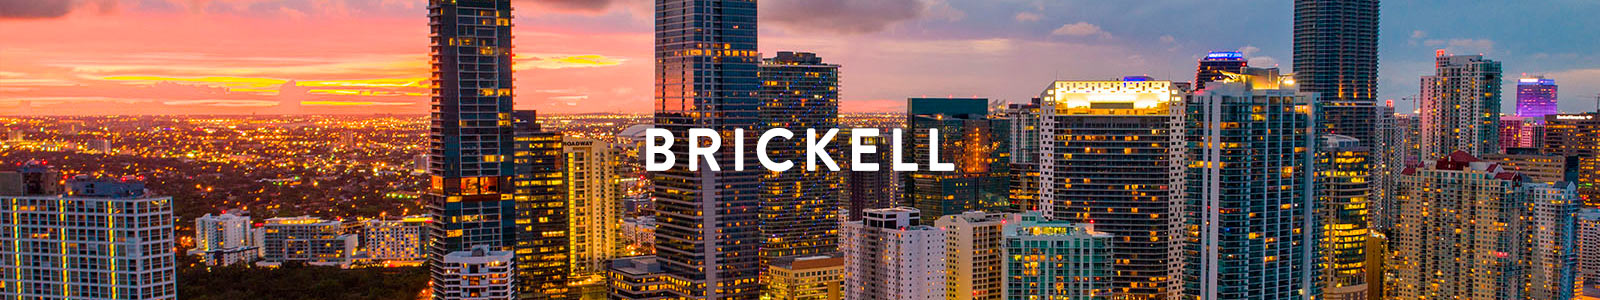 Brickell-banner1